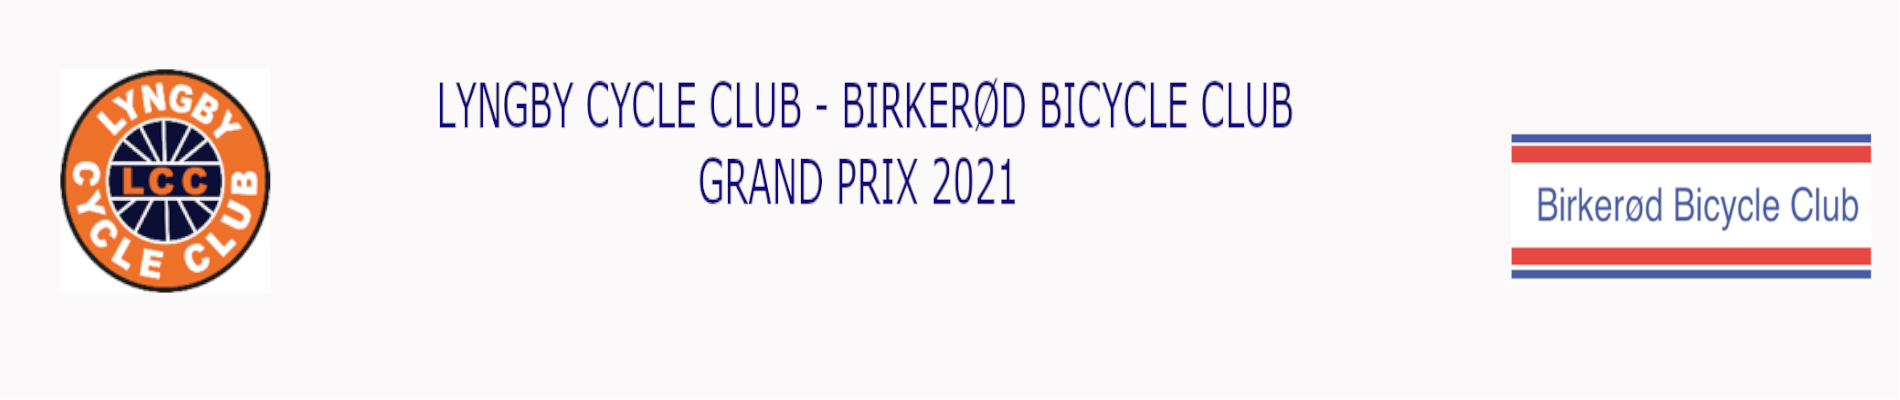 Birkerød BC & Lyngby CC Grand Prix 2021